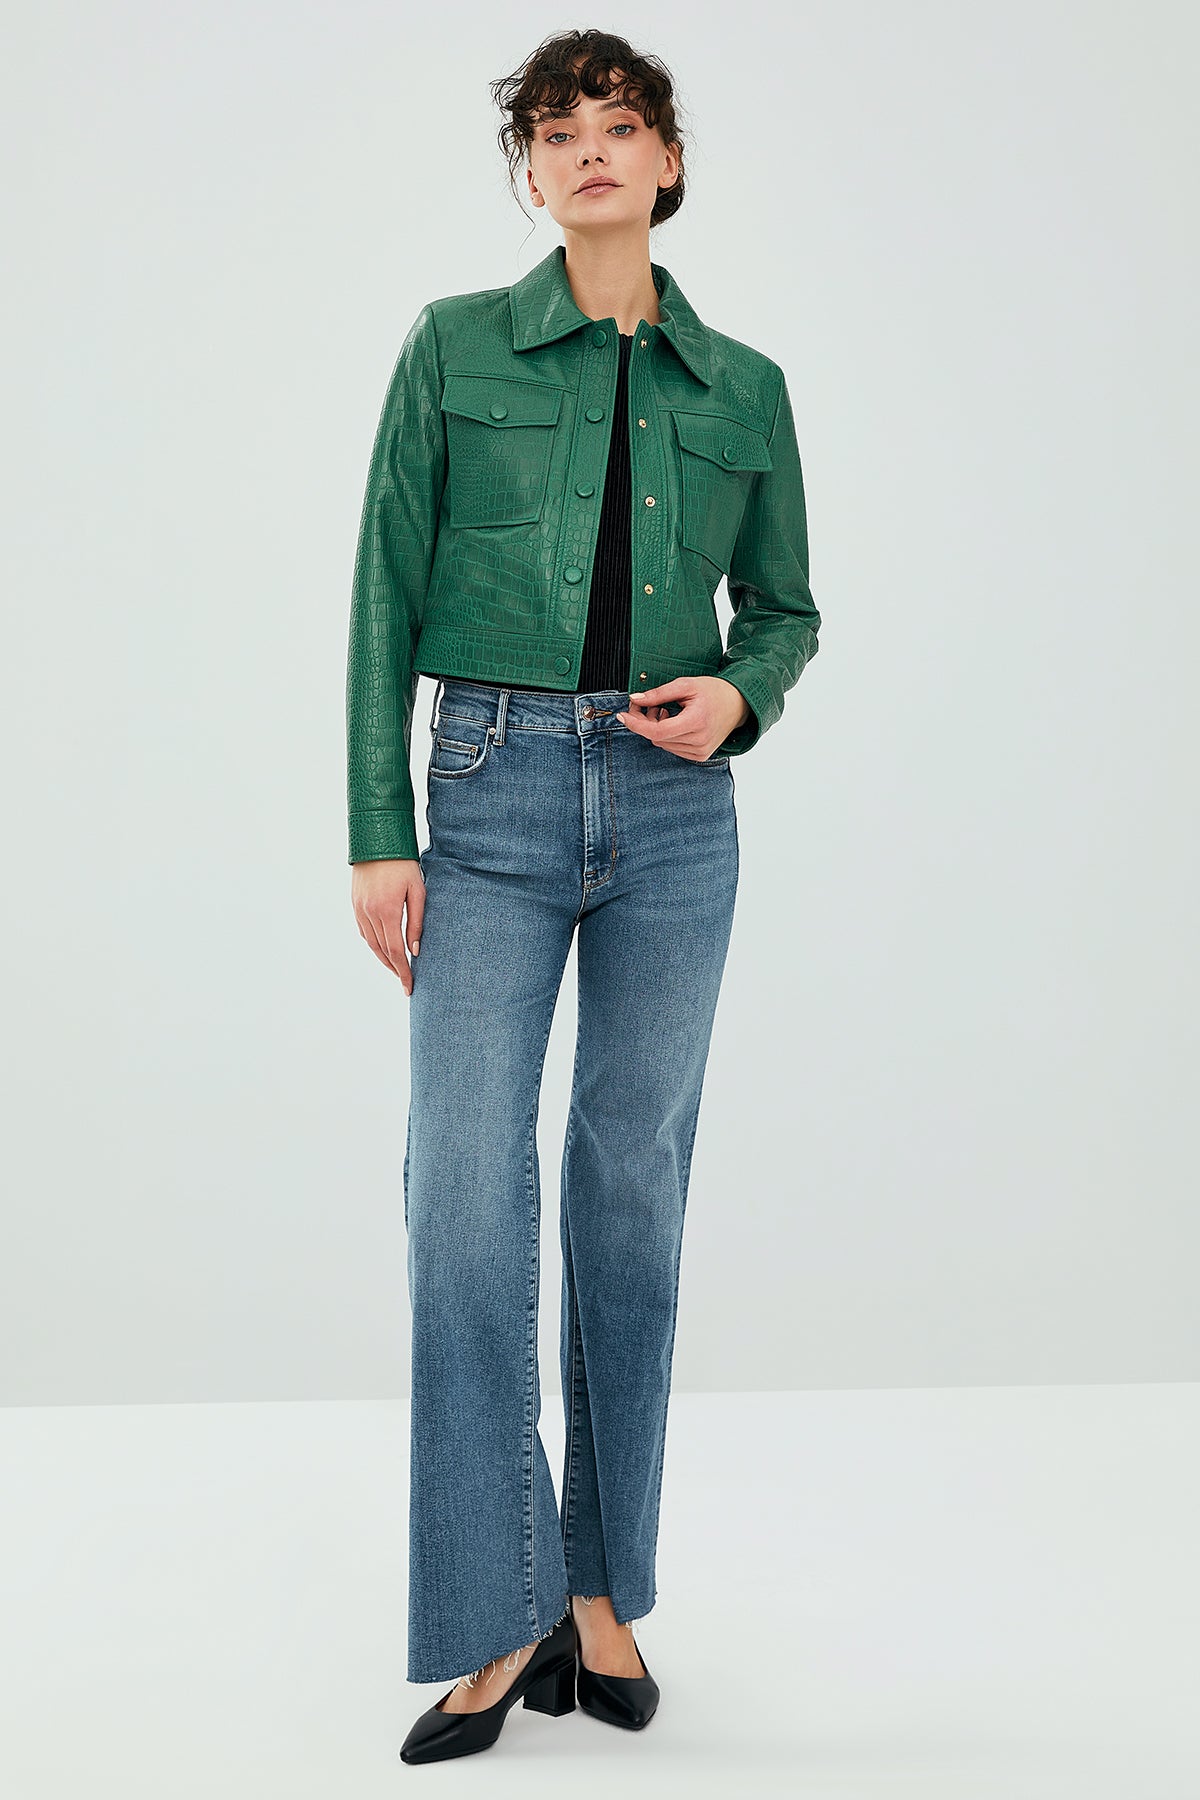 Tina Women's Green Short Leather Jacket